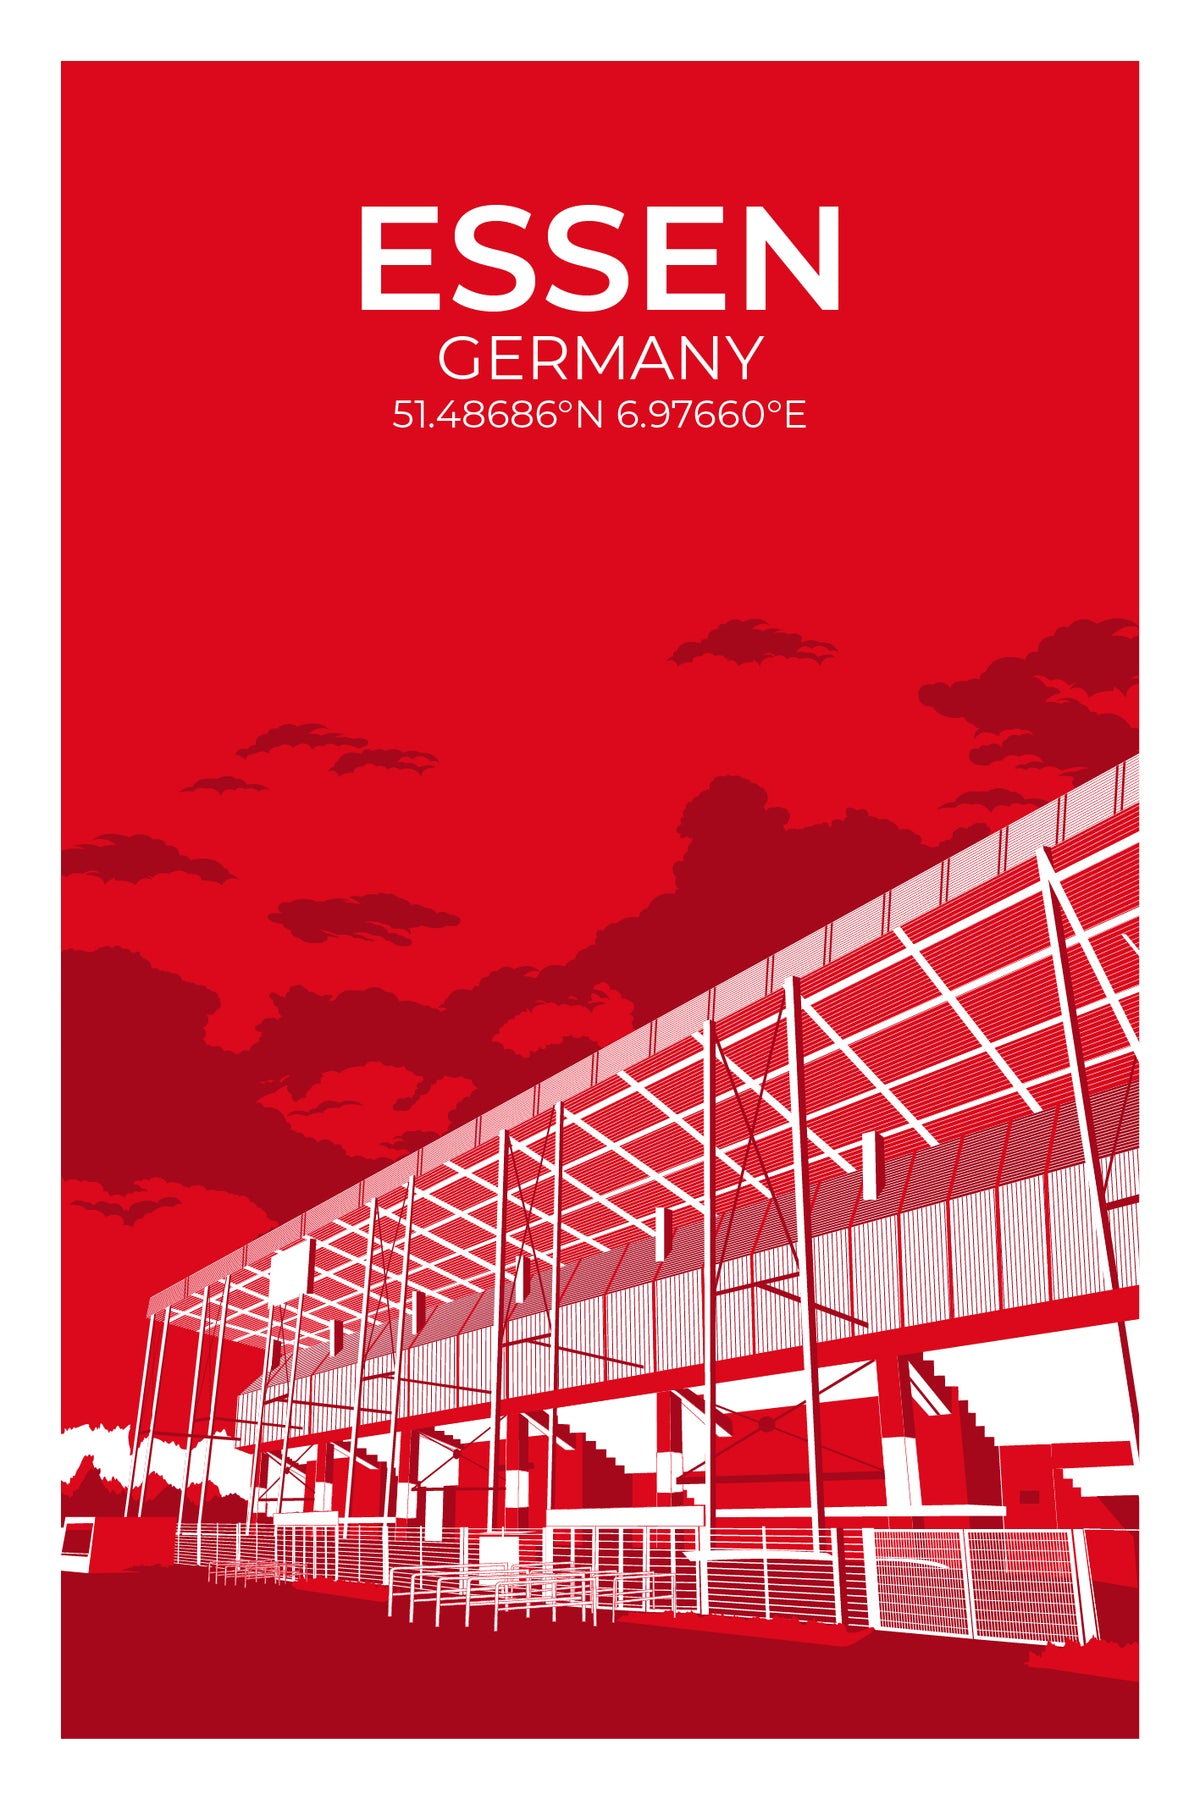 Stadion Illustration Poster Essen